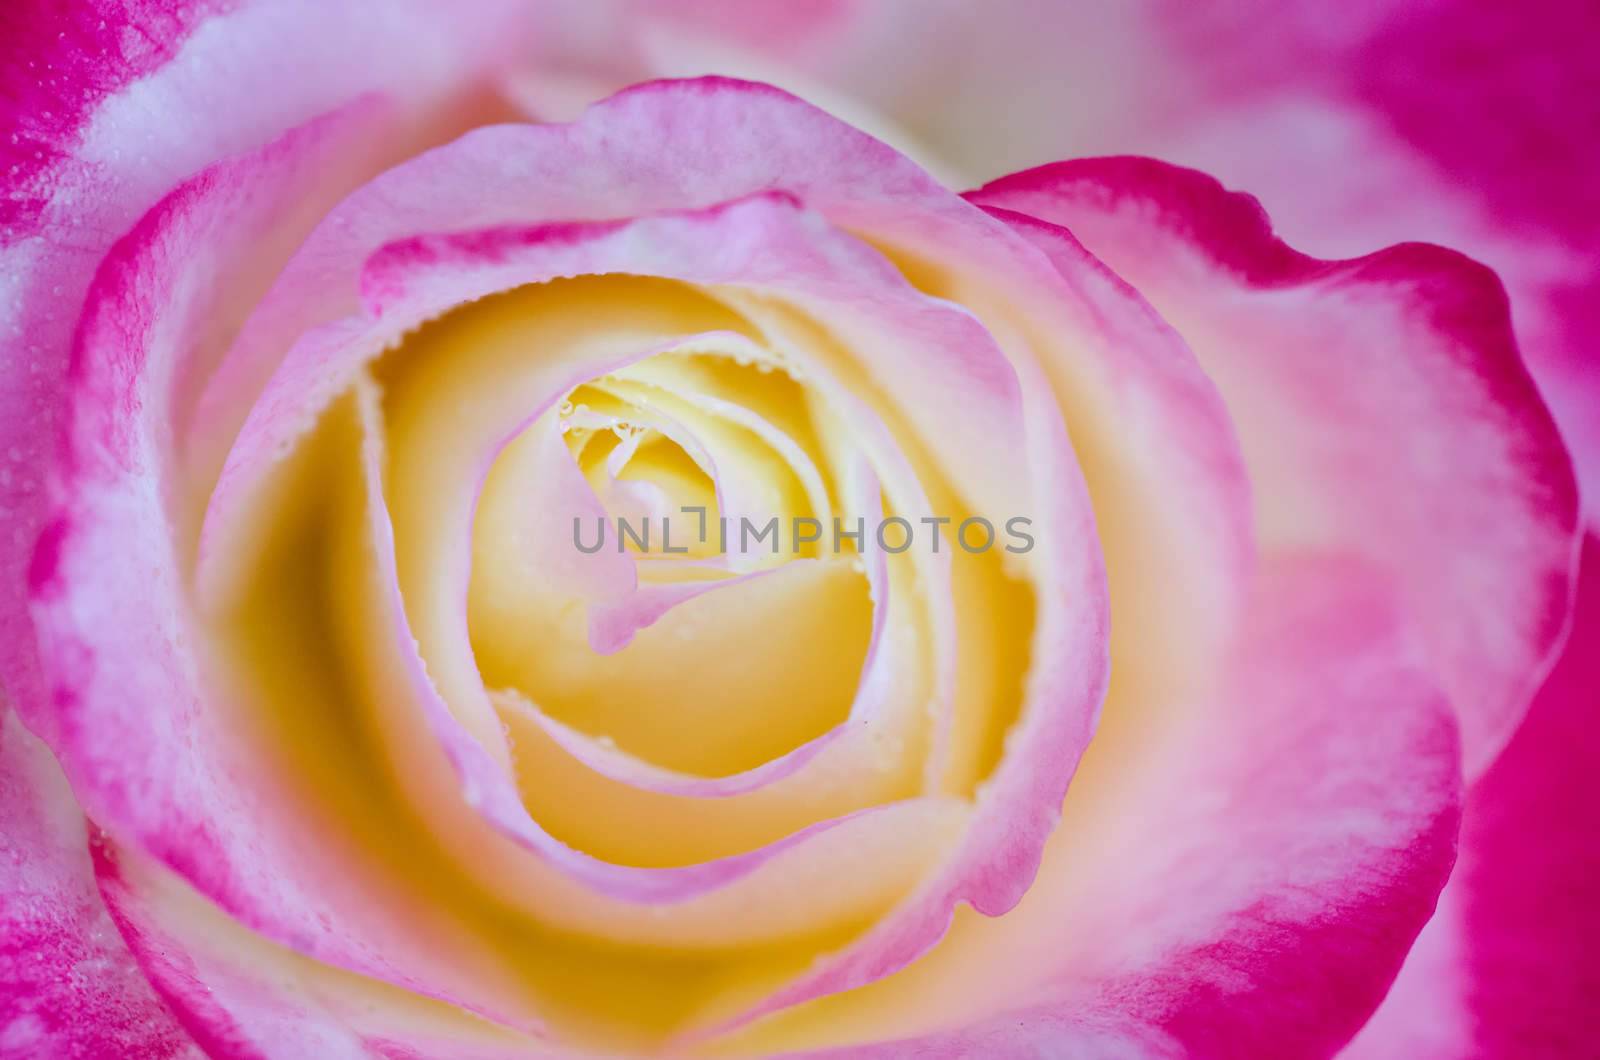 Rose Close-up Shot by mroz